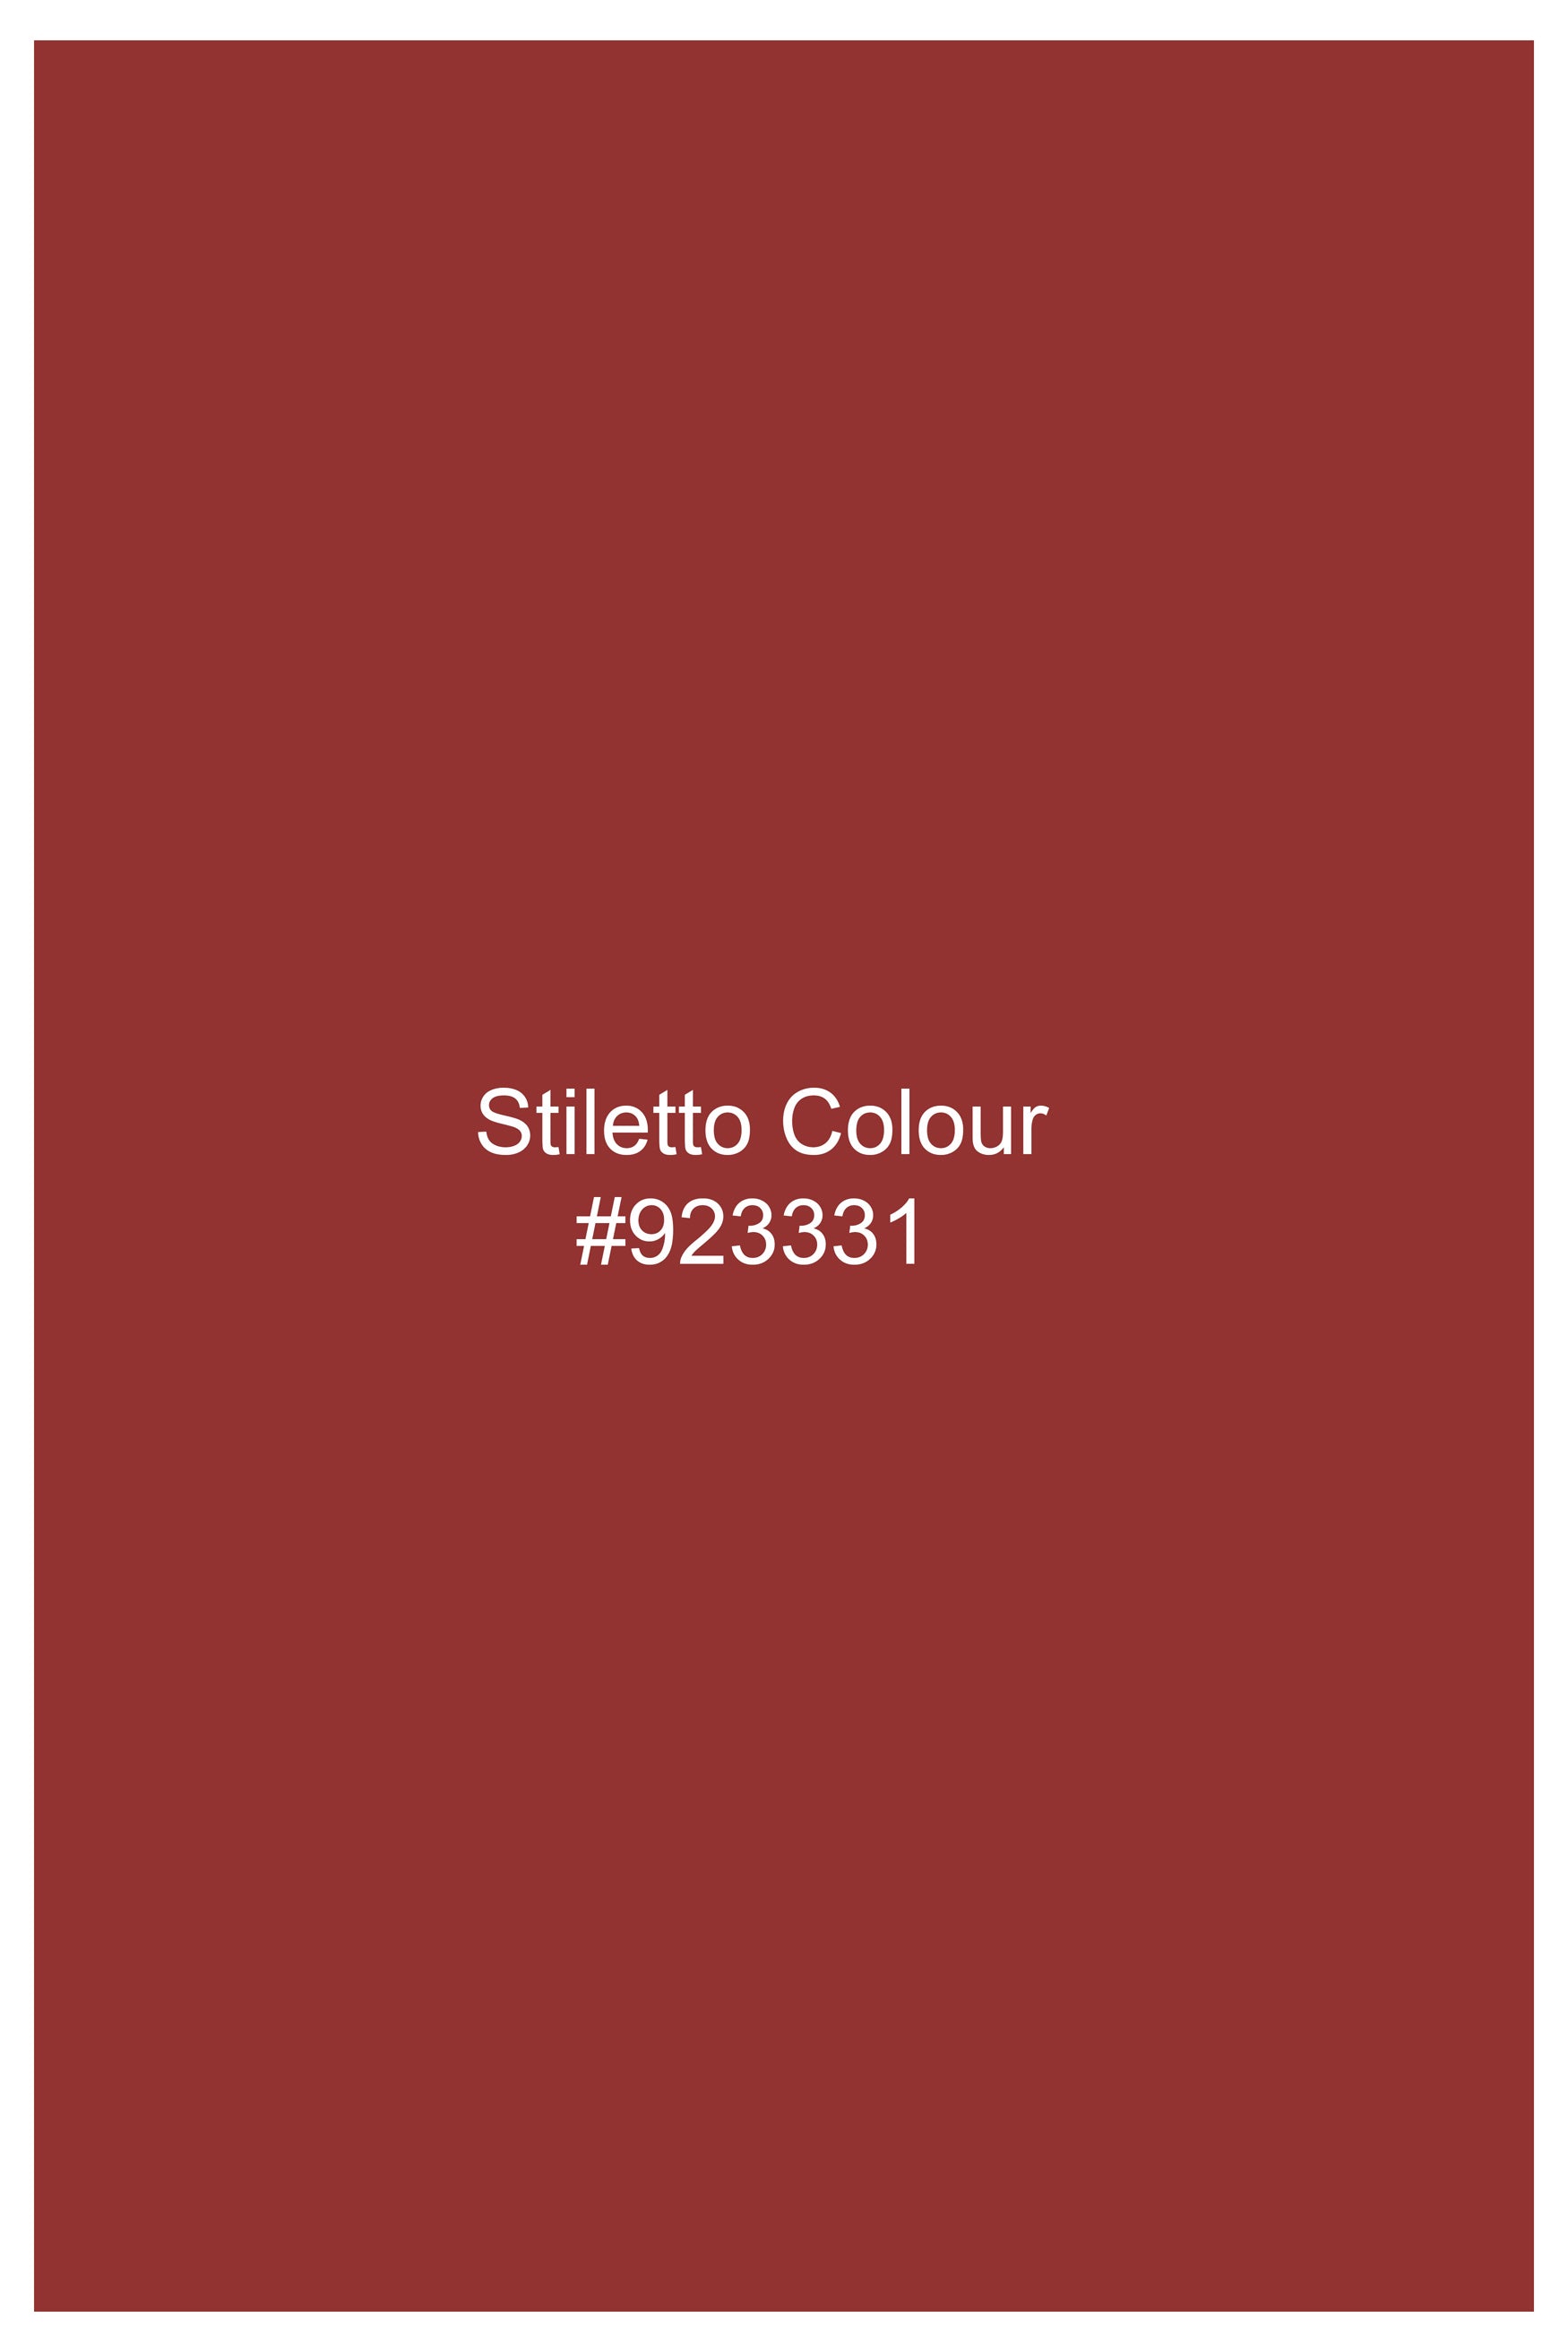 Stiletto Red Twill Premium Cotton Shorts SR403-28, SR403-30, SR403-32, SR403-34, SR403-36, SR403-38, SR403-40, SR403-42, SR403-44